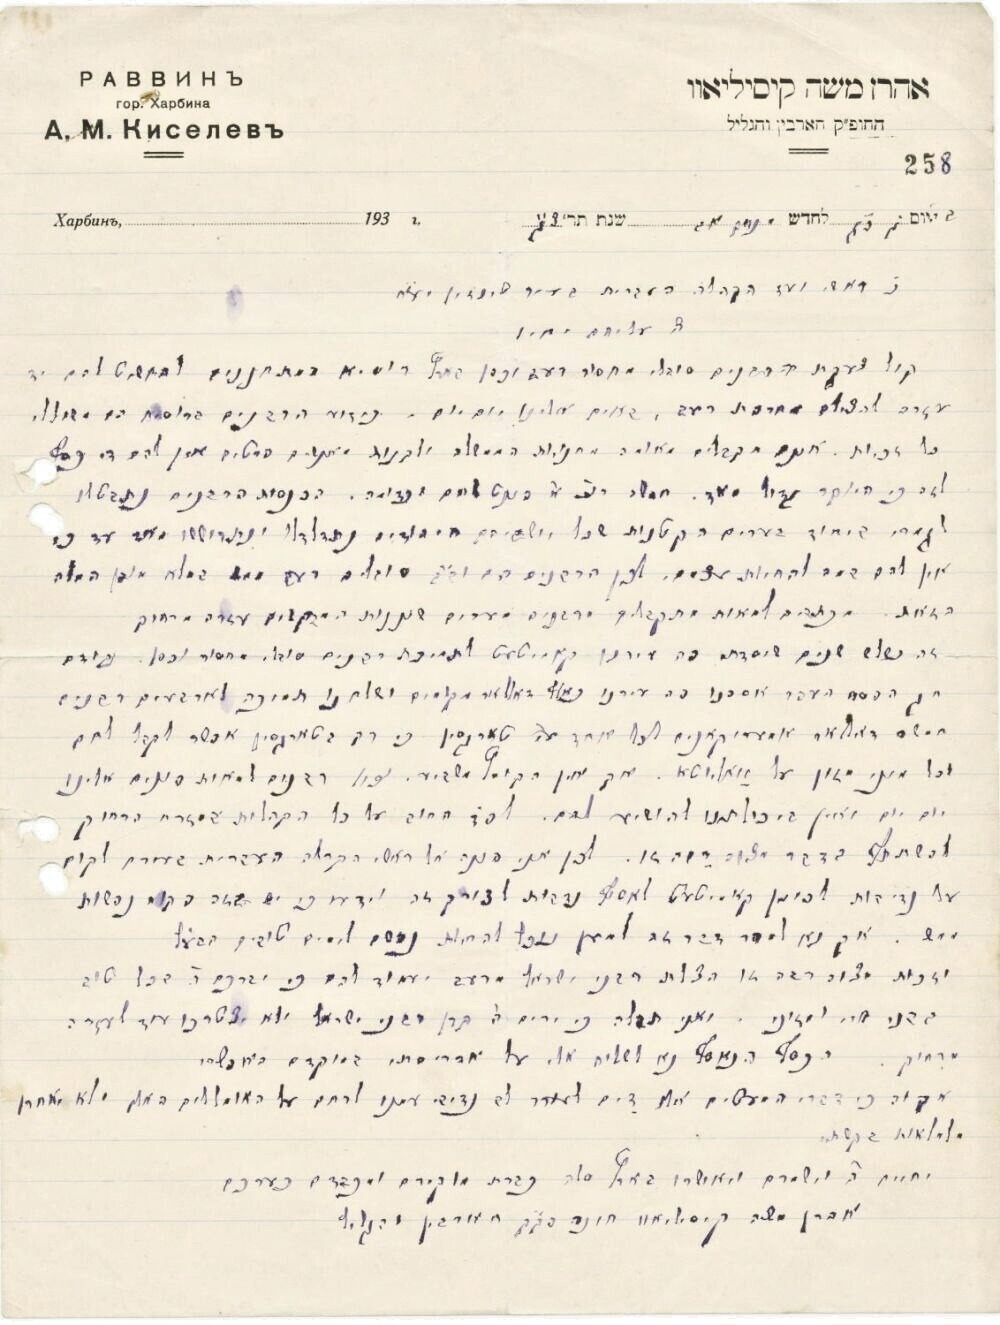 Letter by Rabbi Aaron Moshe Kiselev, chief Rabbi of Harbin, China